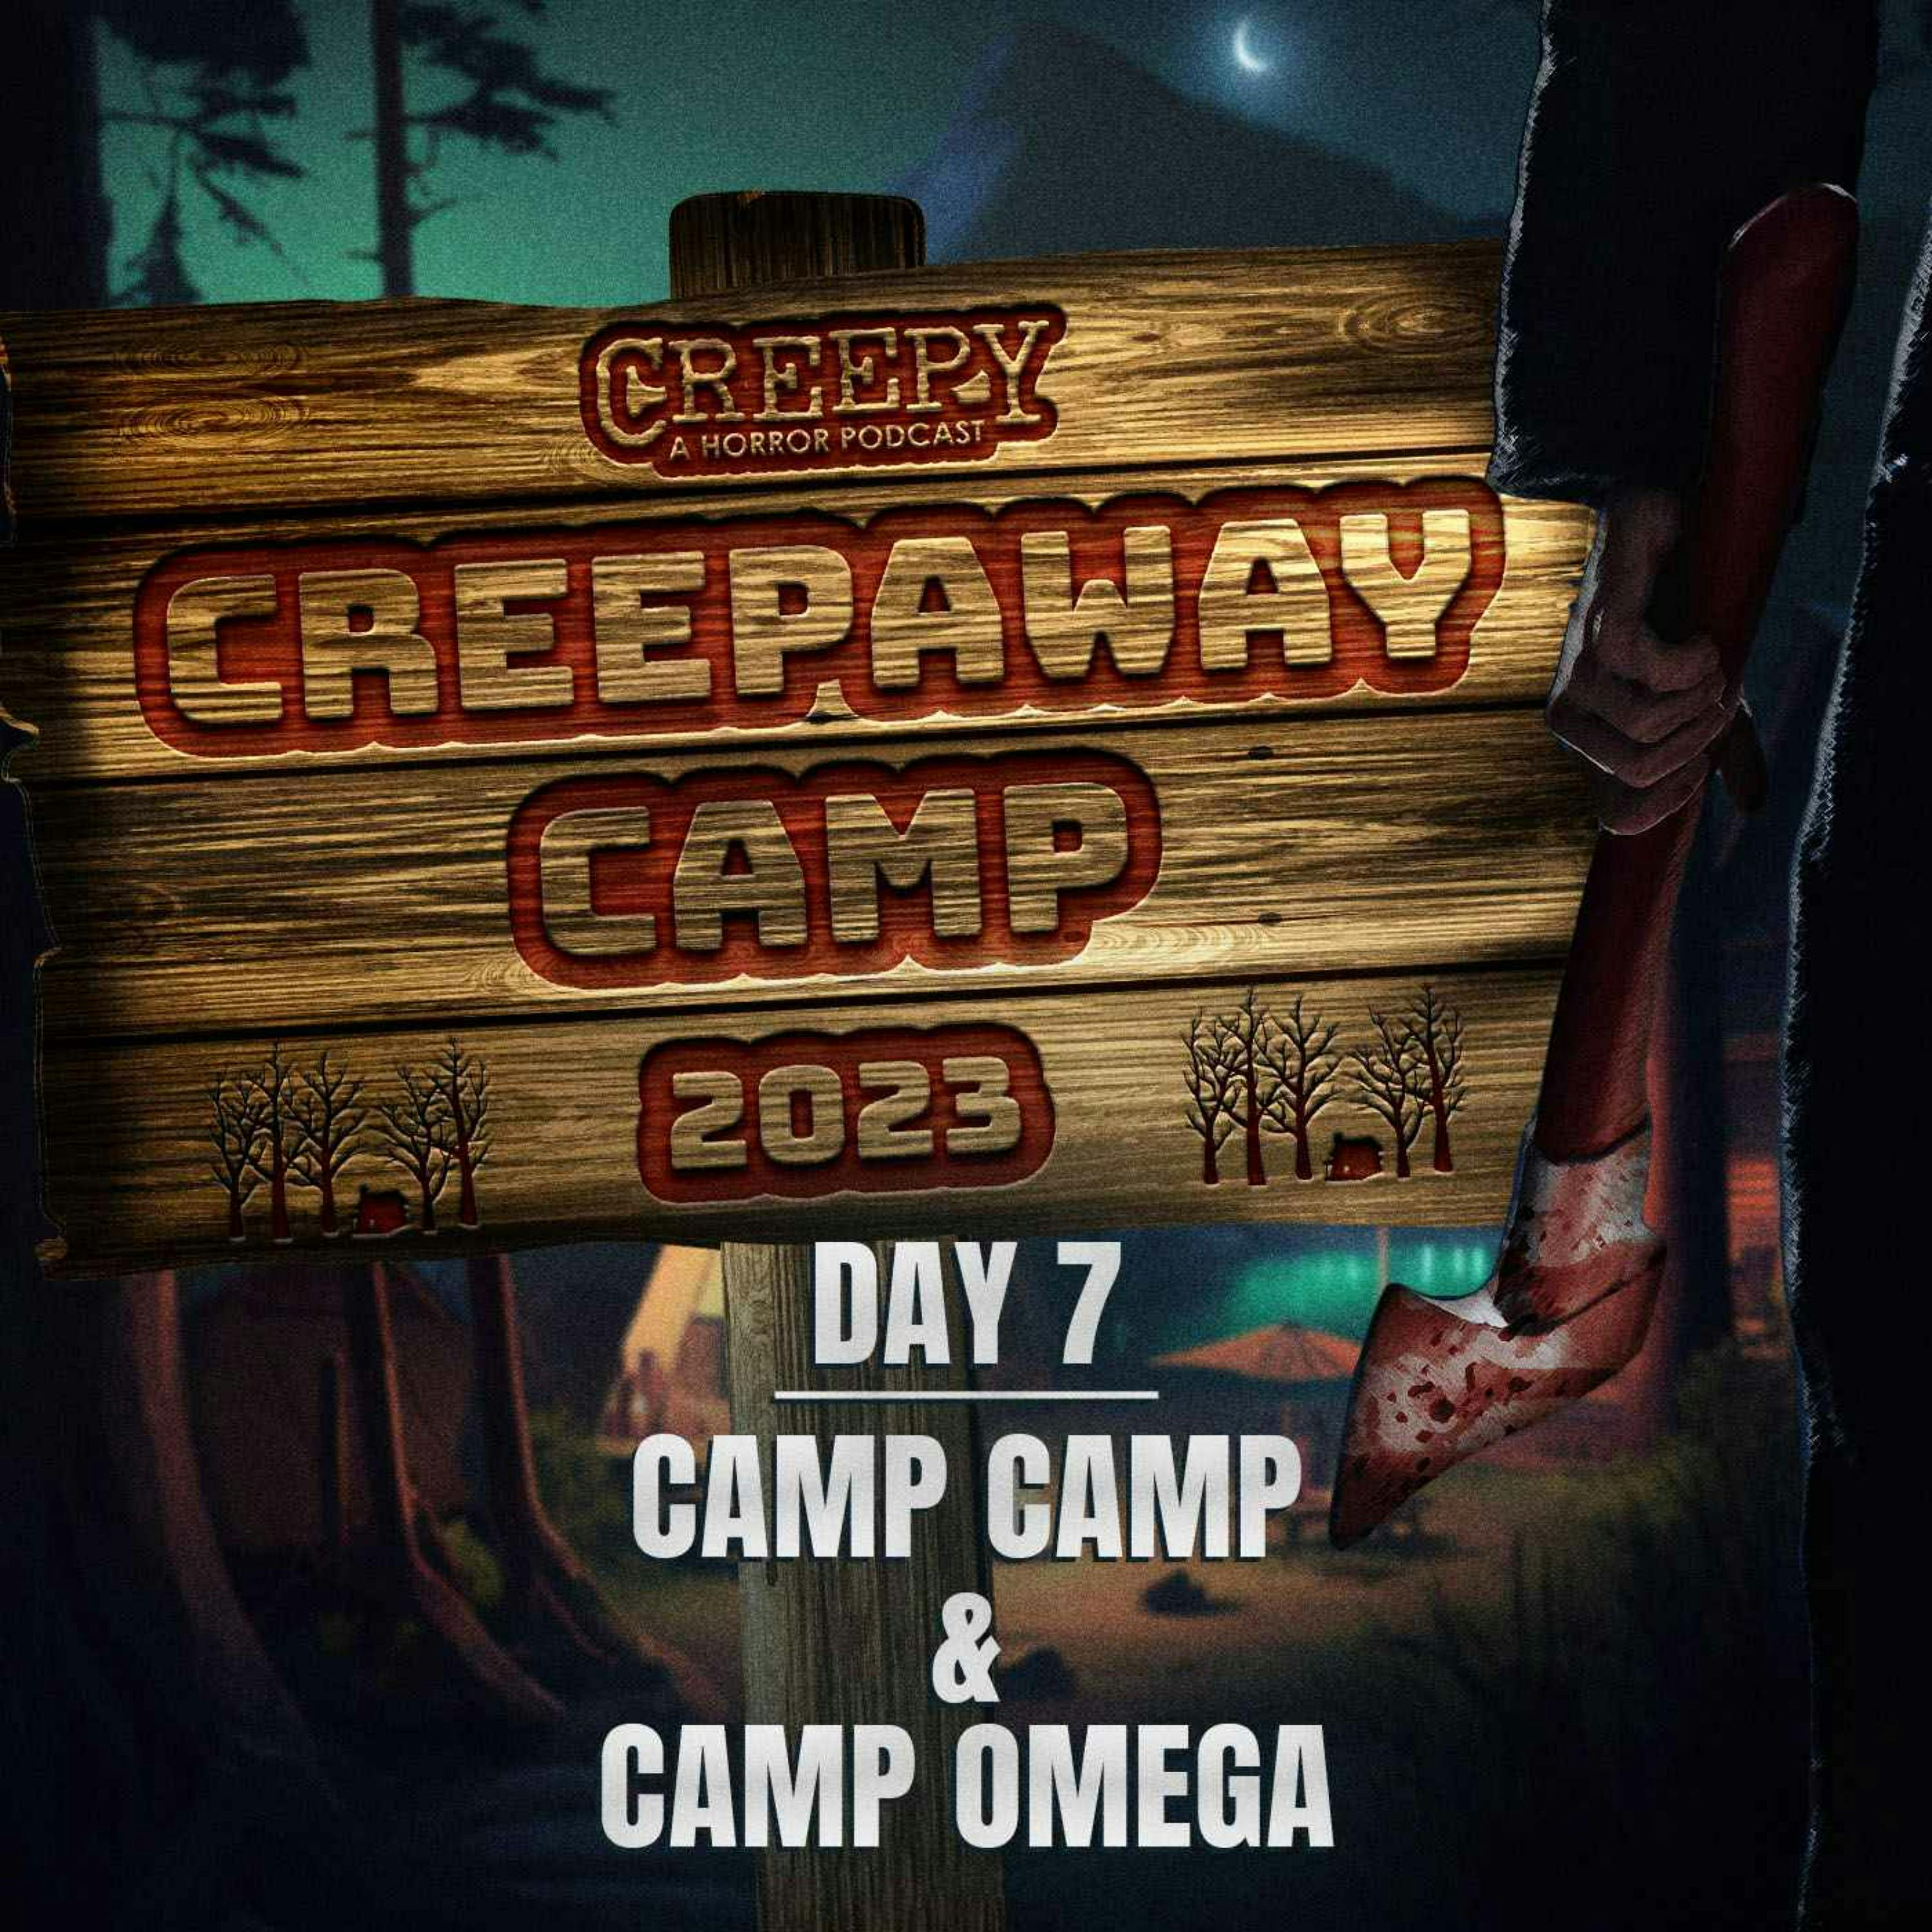 Creepaway Camp 2023 - Day 7: Camp Camp & Camp Omega